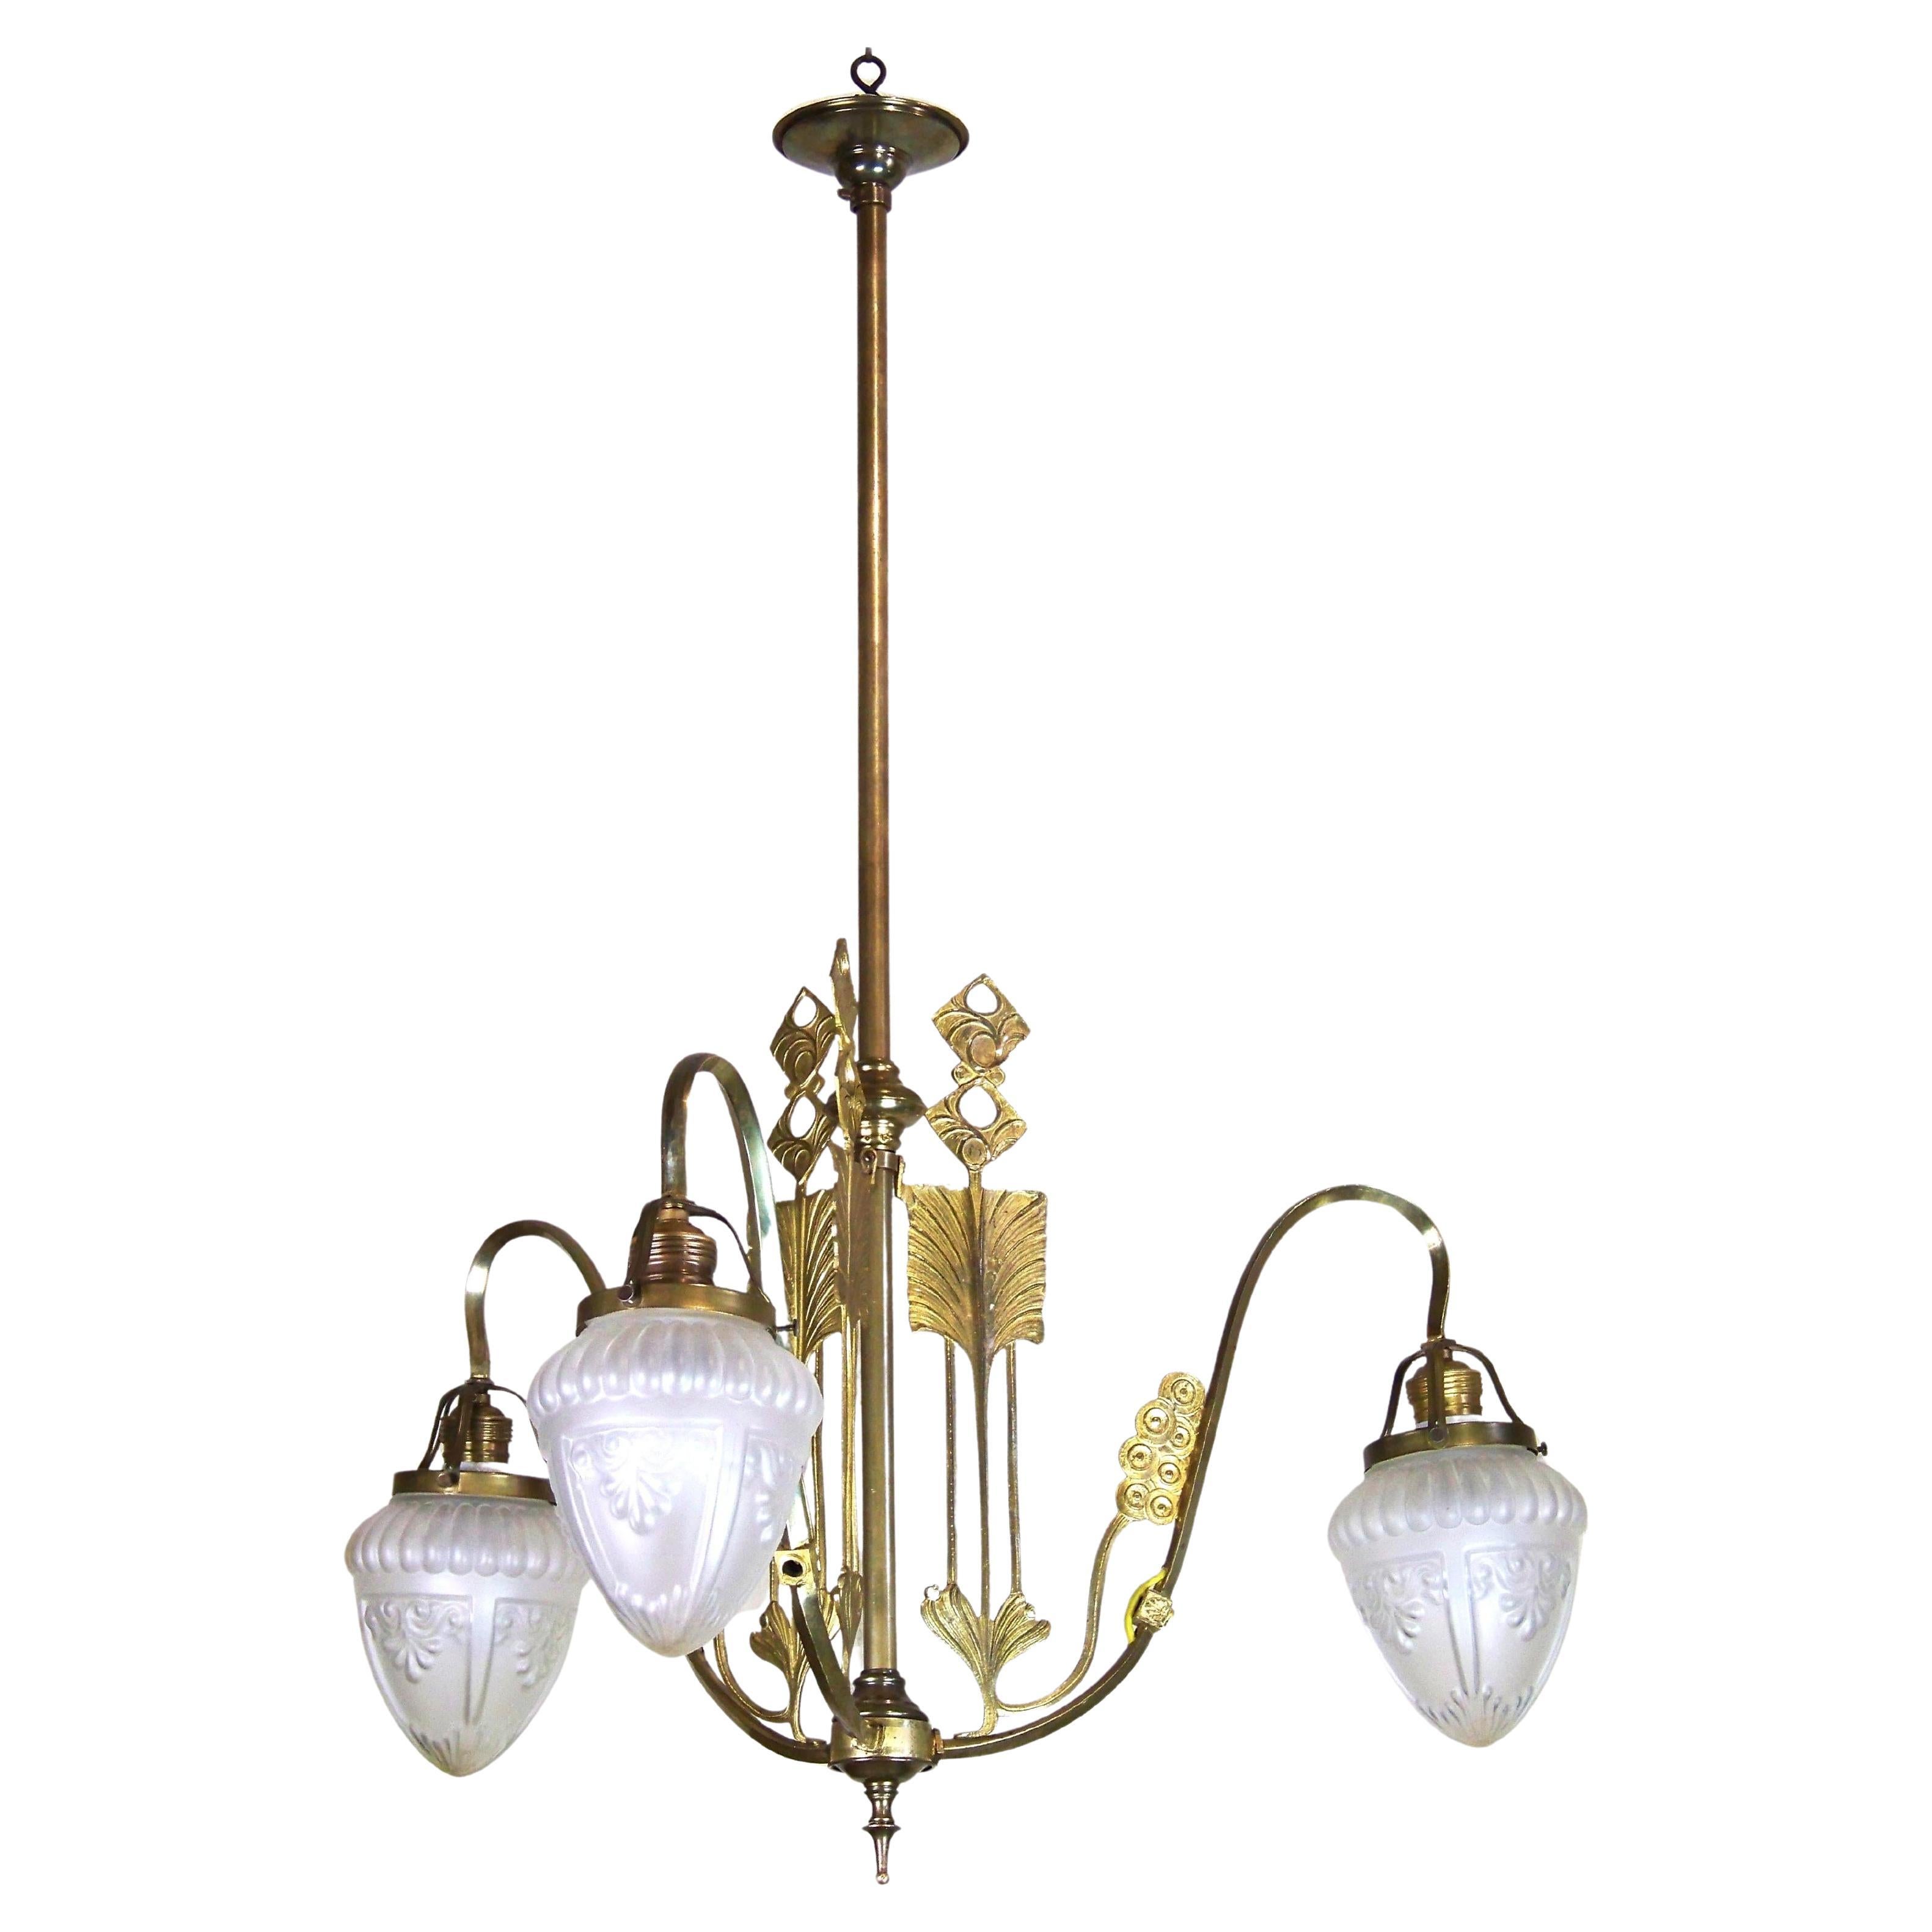 Art Nouveau brass chandelier